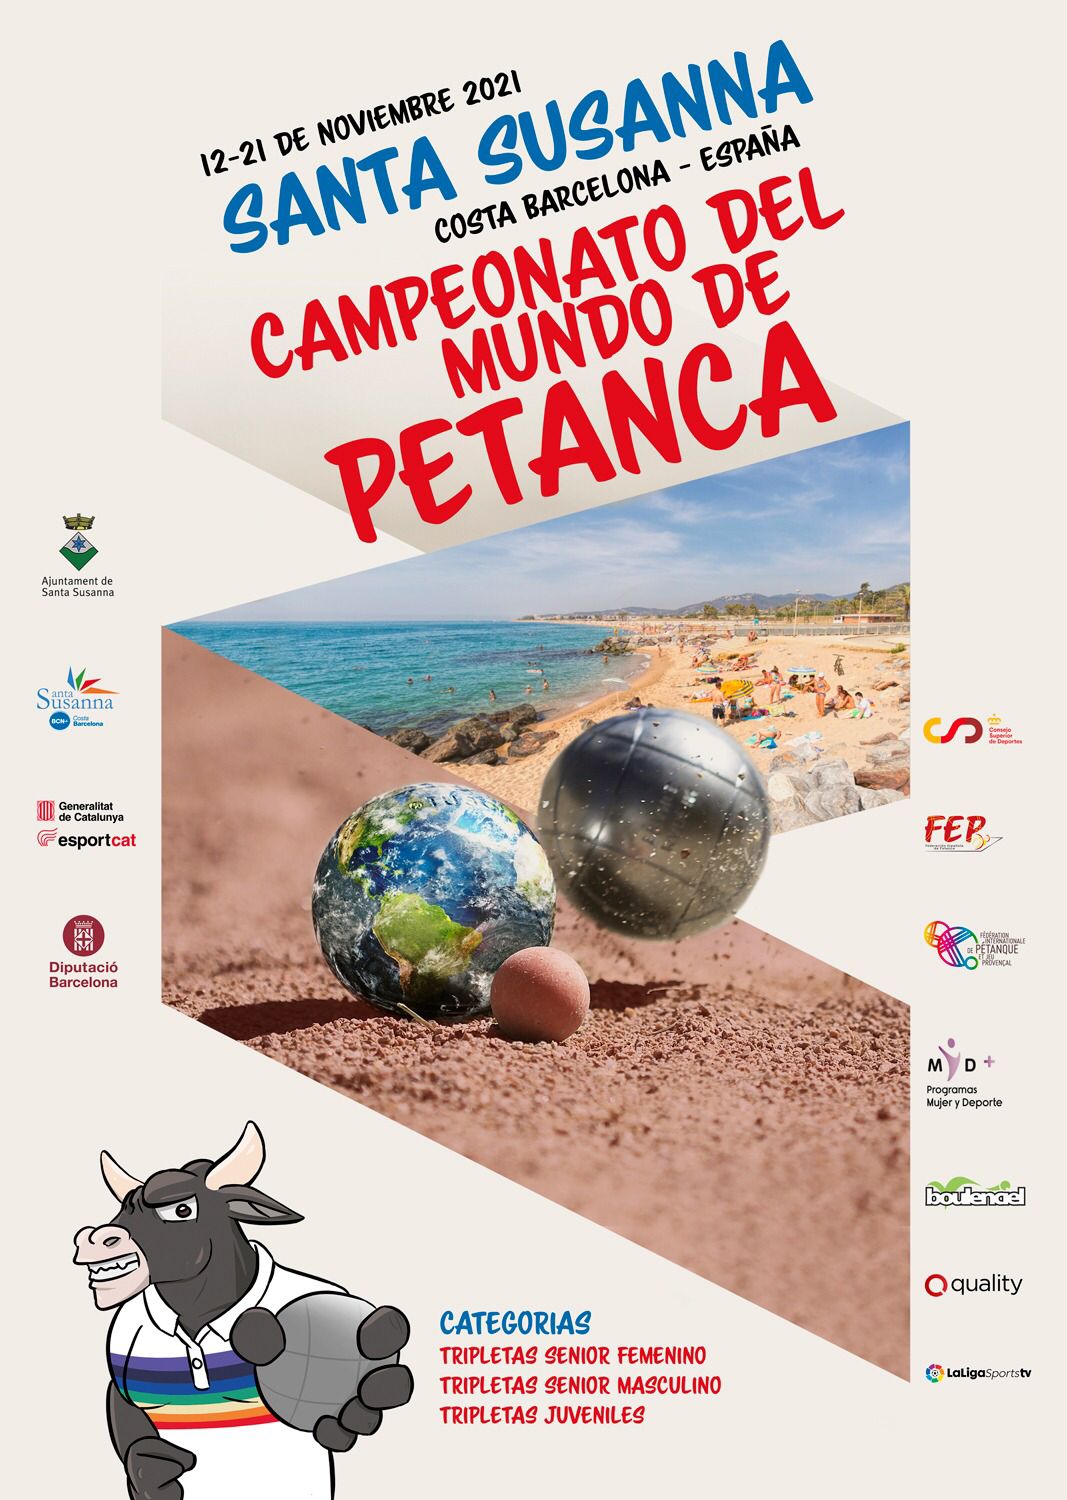 Petanque World Championship